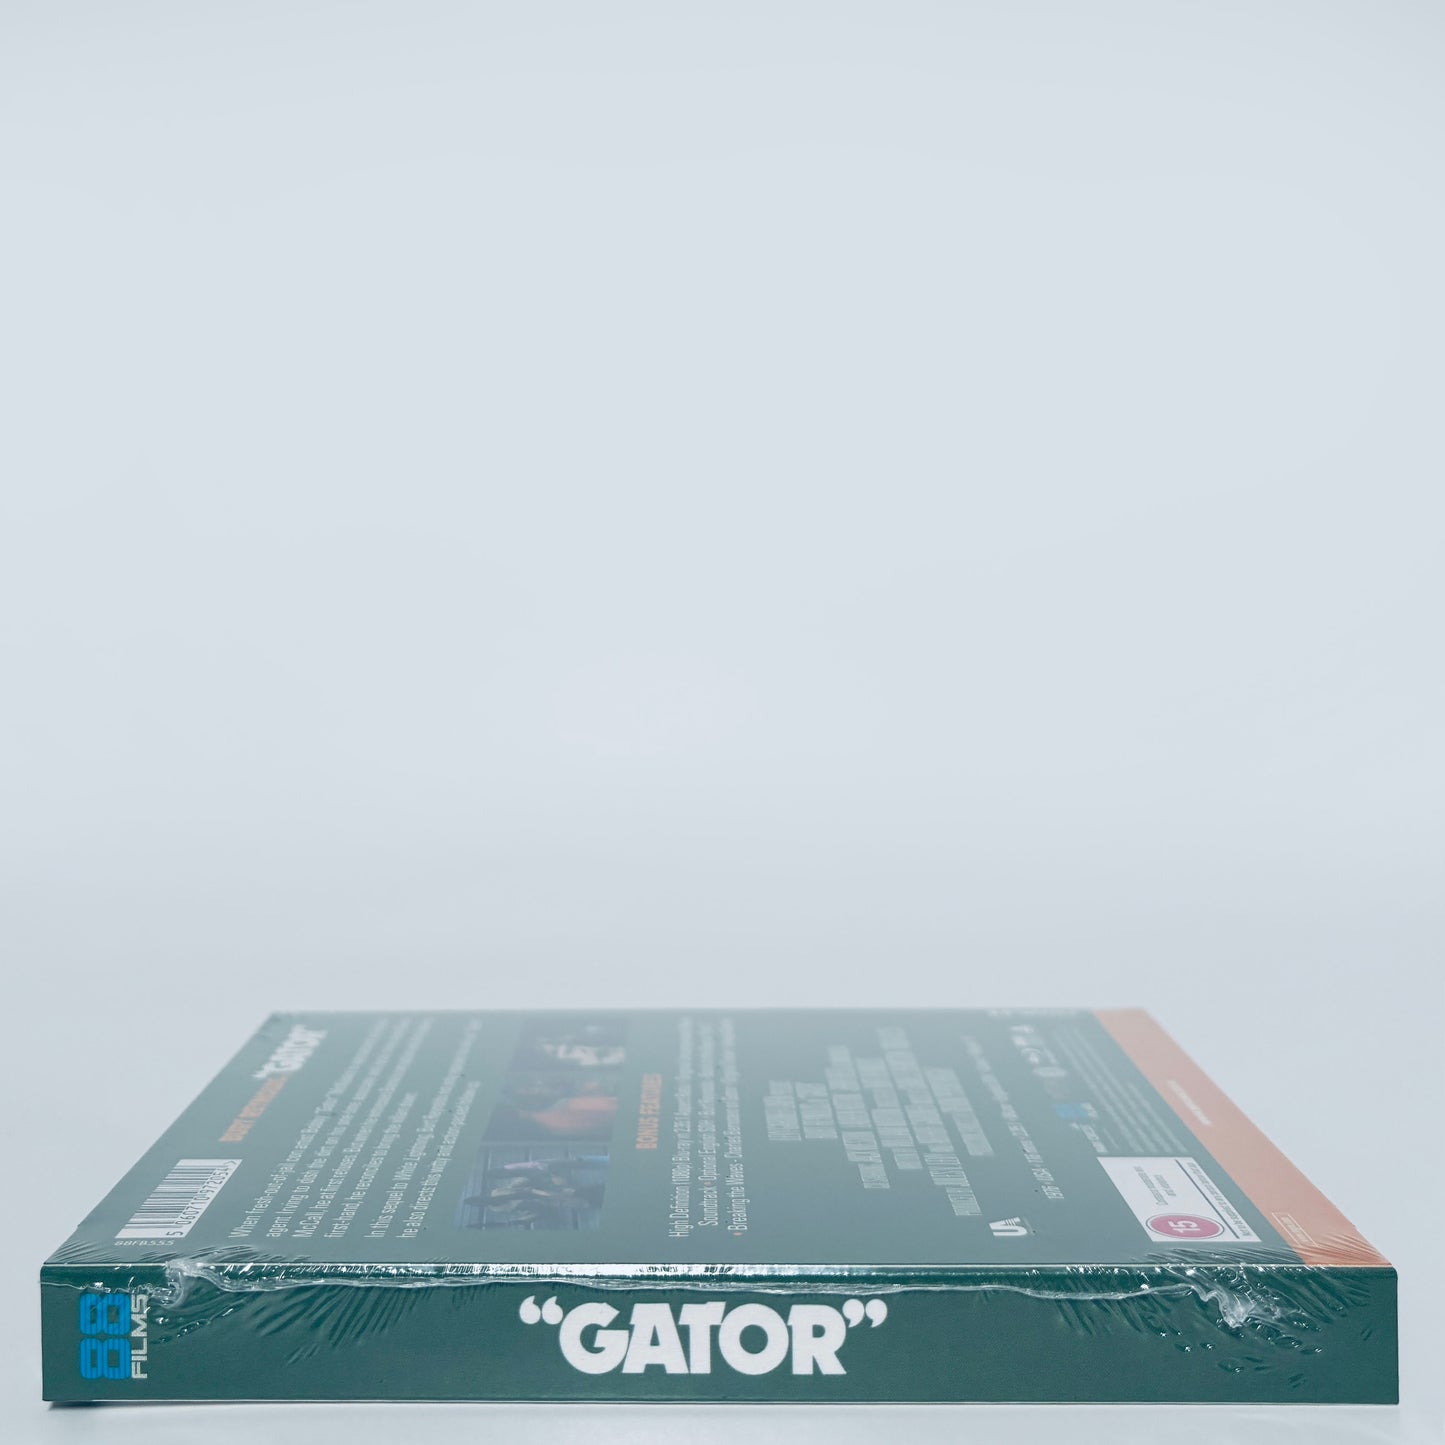 Gator Burt Reynolds 1976 White Lightning 2 Limited Edition Blu-ray 88 Films